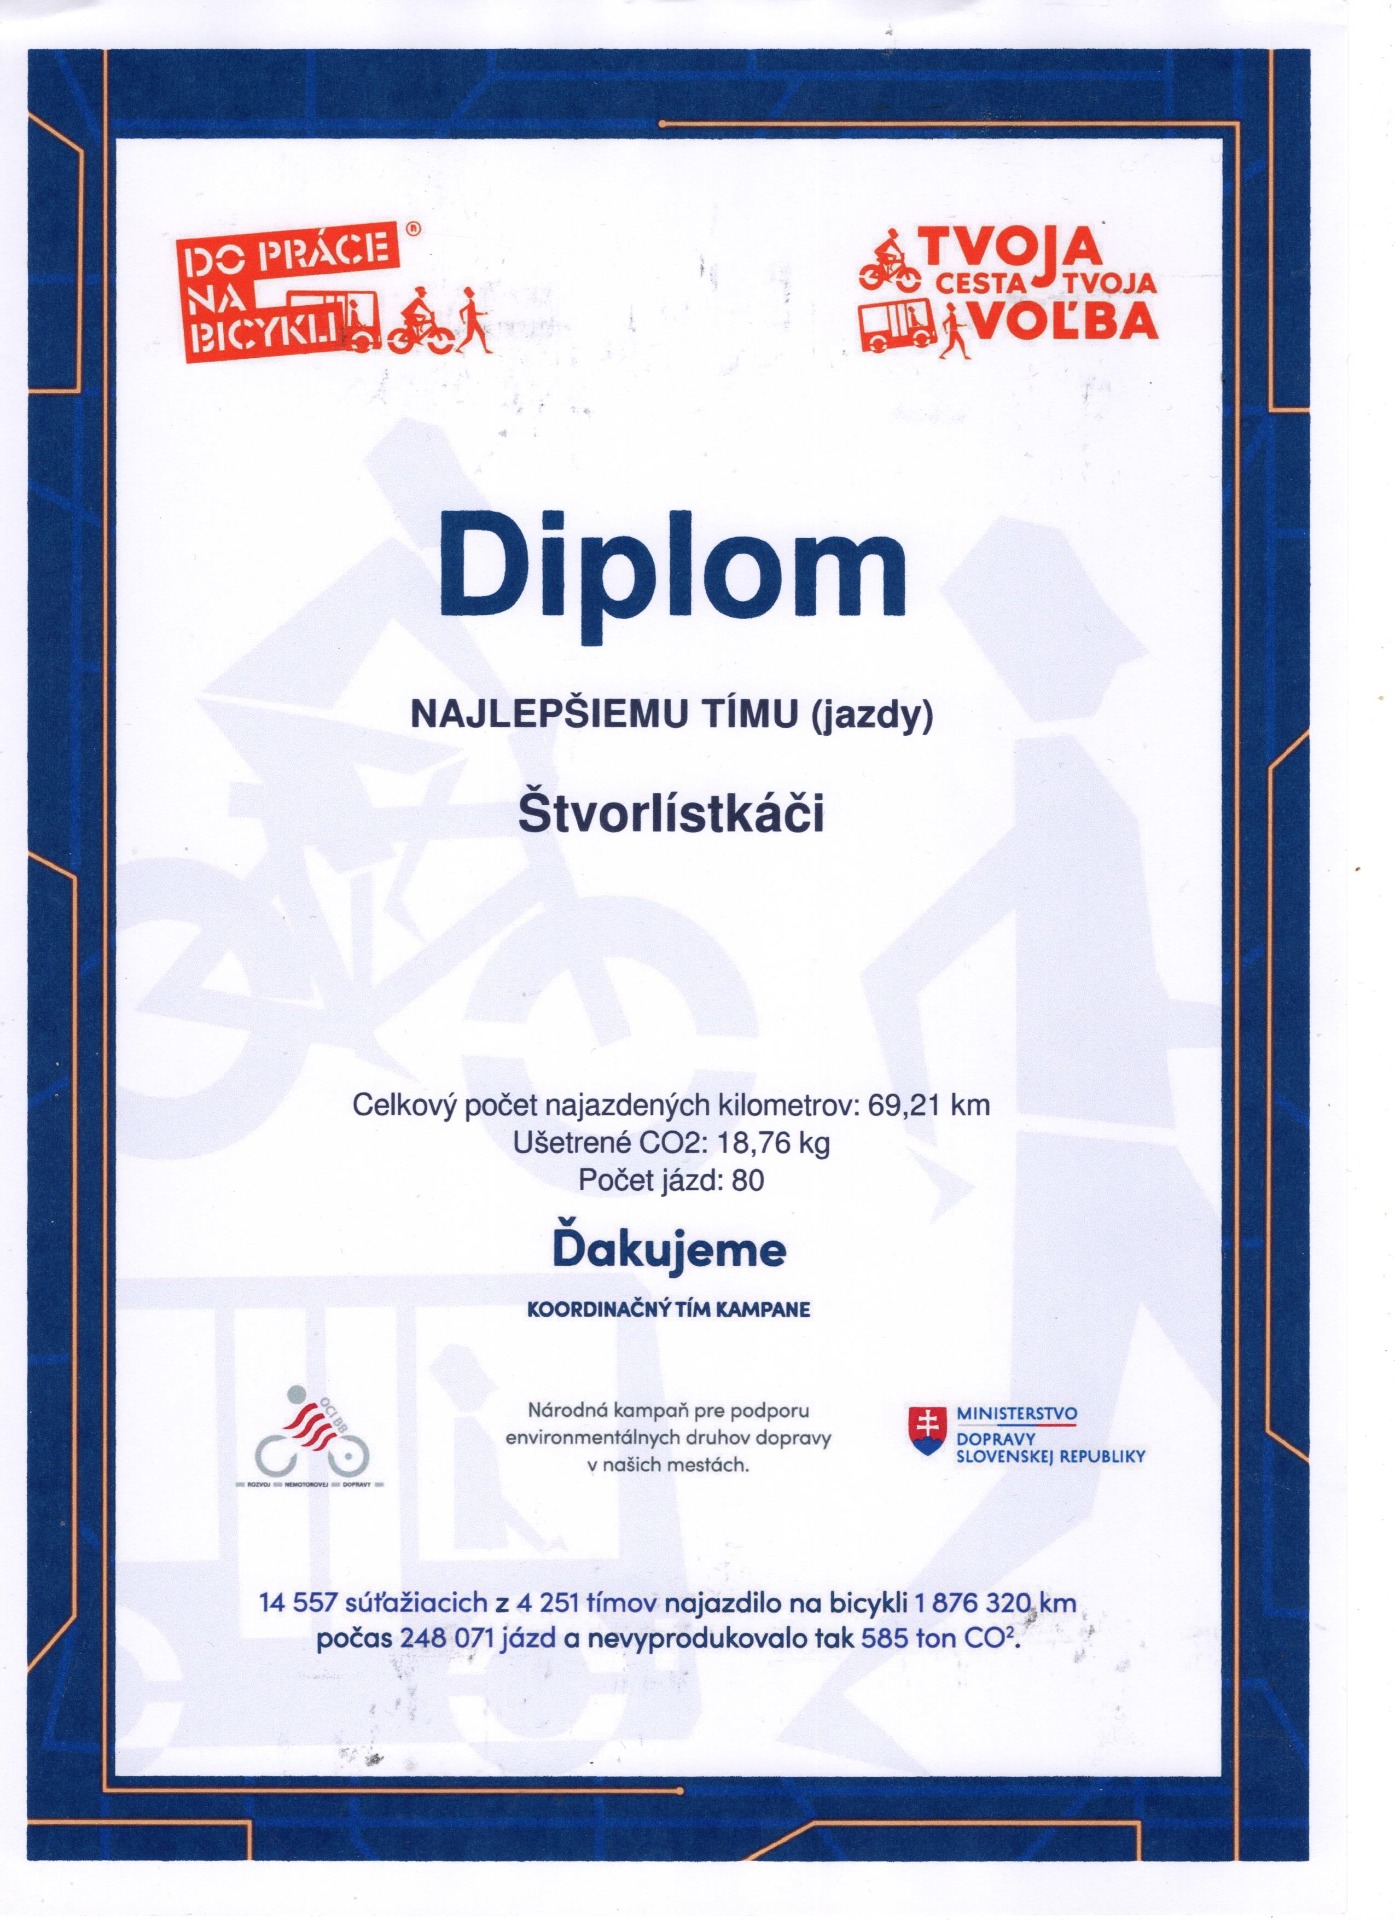 Škola v rámci kampane „Do práce na bicykli“ ocenená aj pani primátorkou mesta Skalica - Obrázok 2